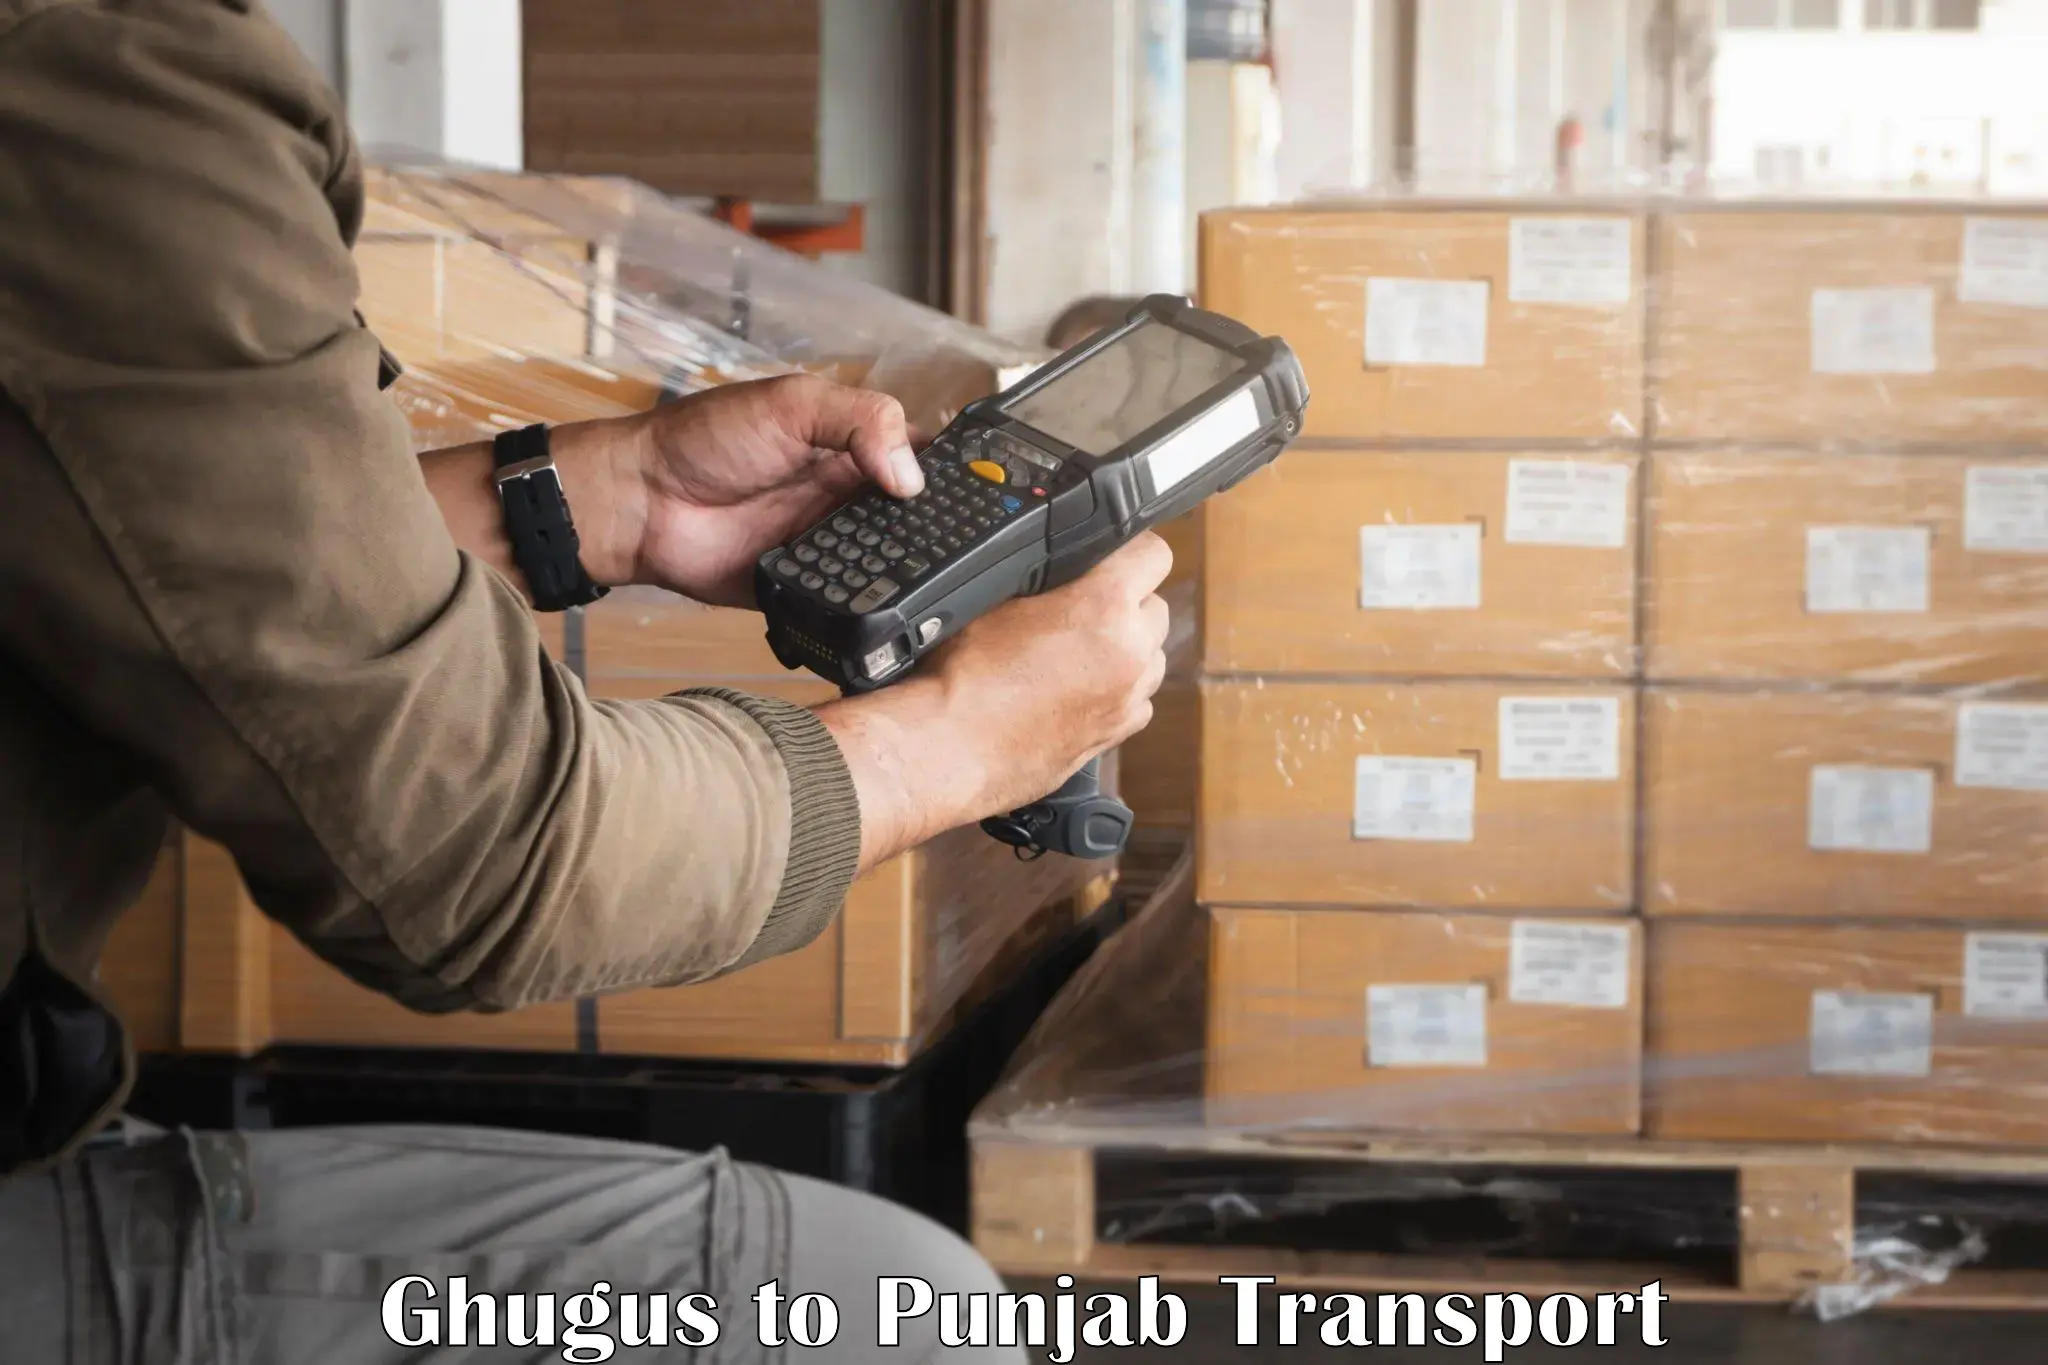 Cycle transportation service Ghugus to Punjab